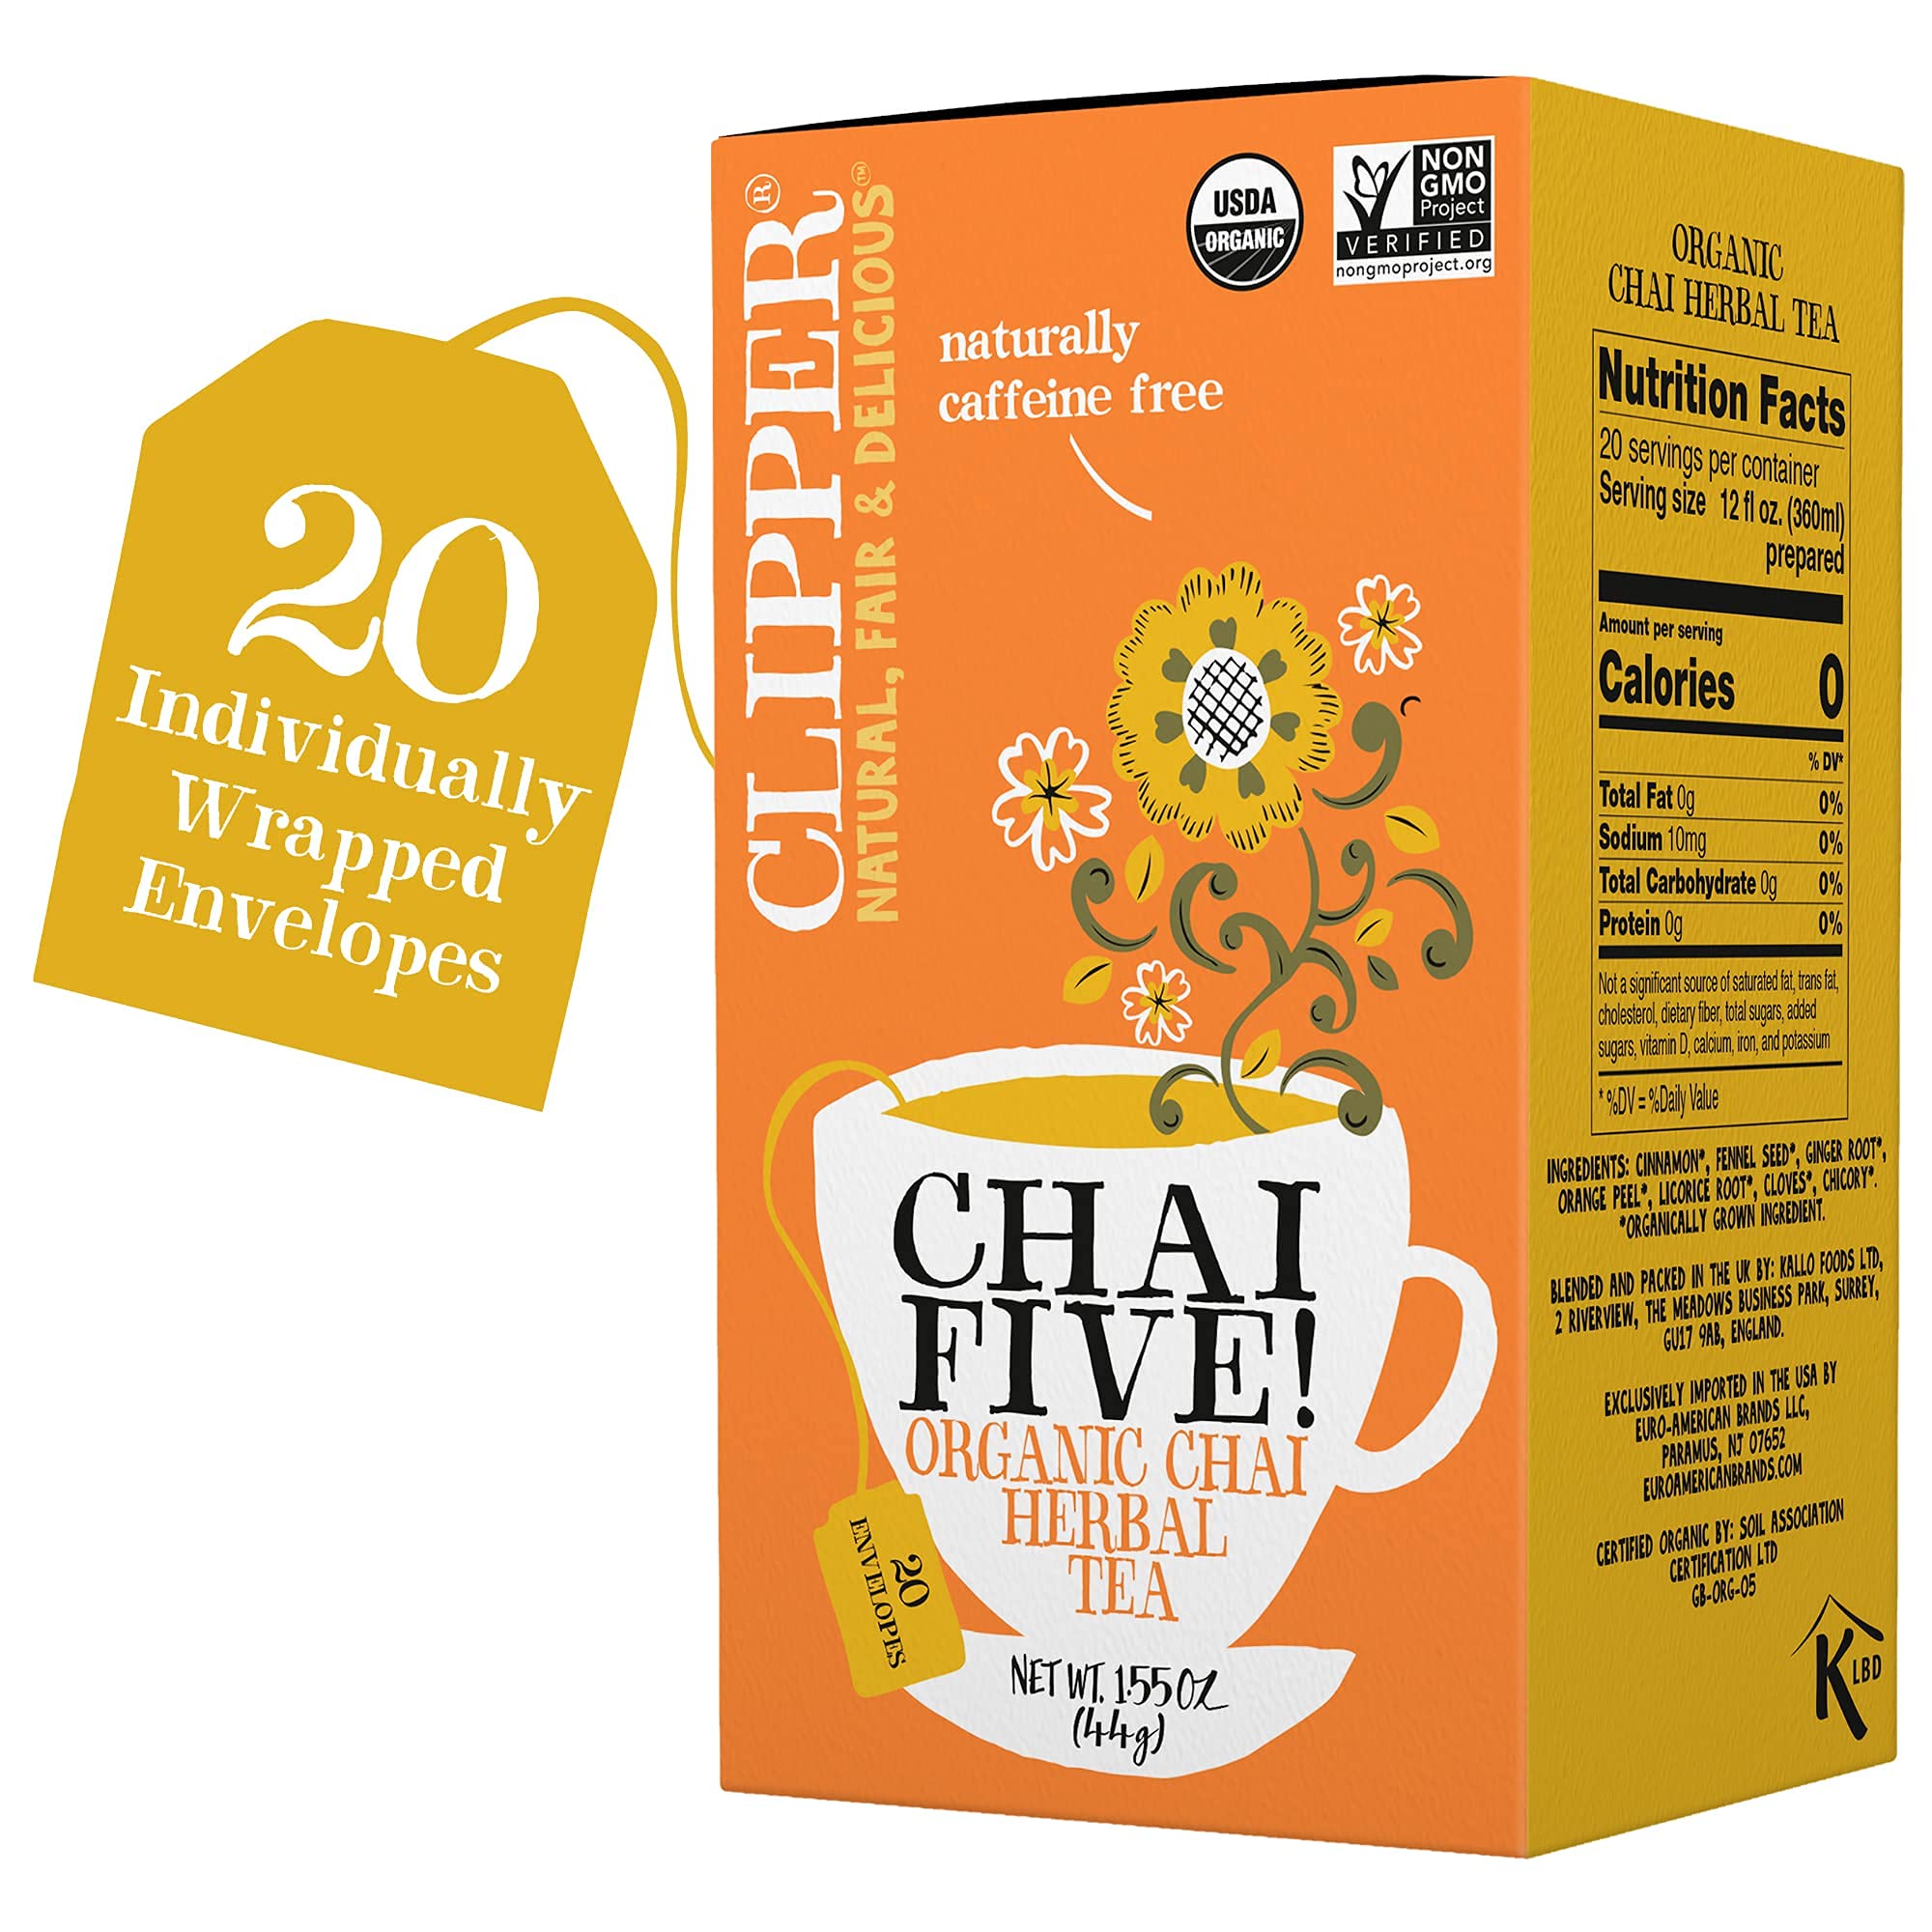 Clipper Tea Organic Chai Herbal Tea, Chai Five - USDA Organic, Non-GMO,  Caffeine Free Tea, 1